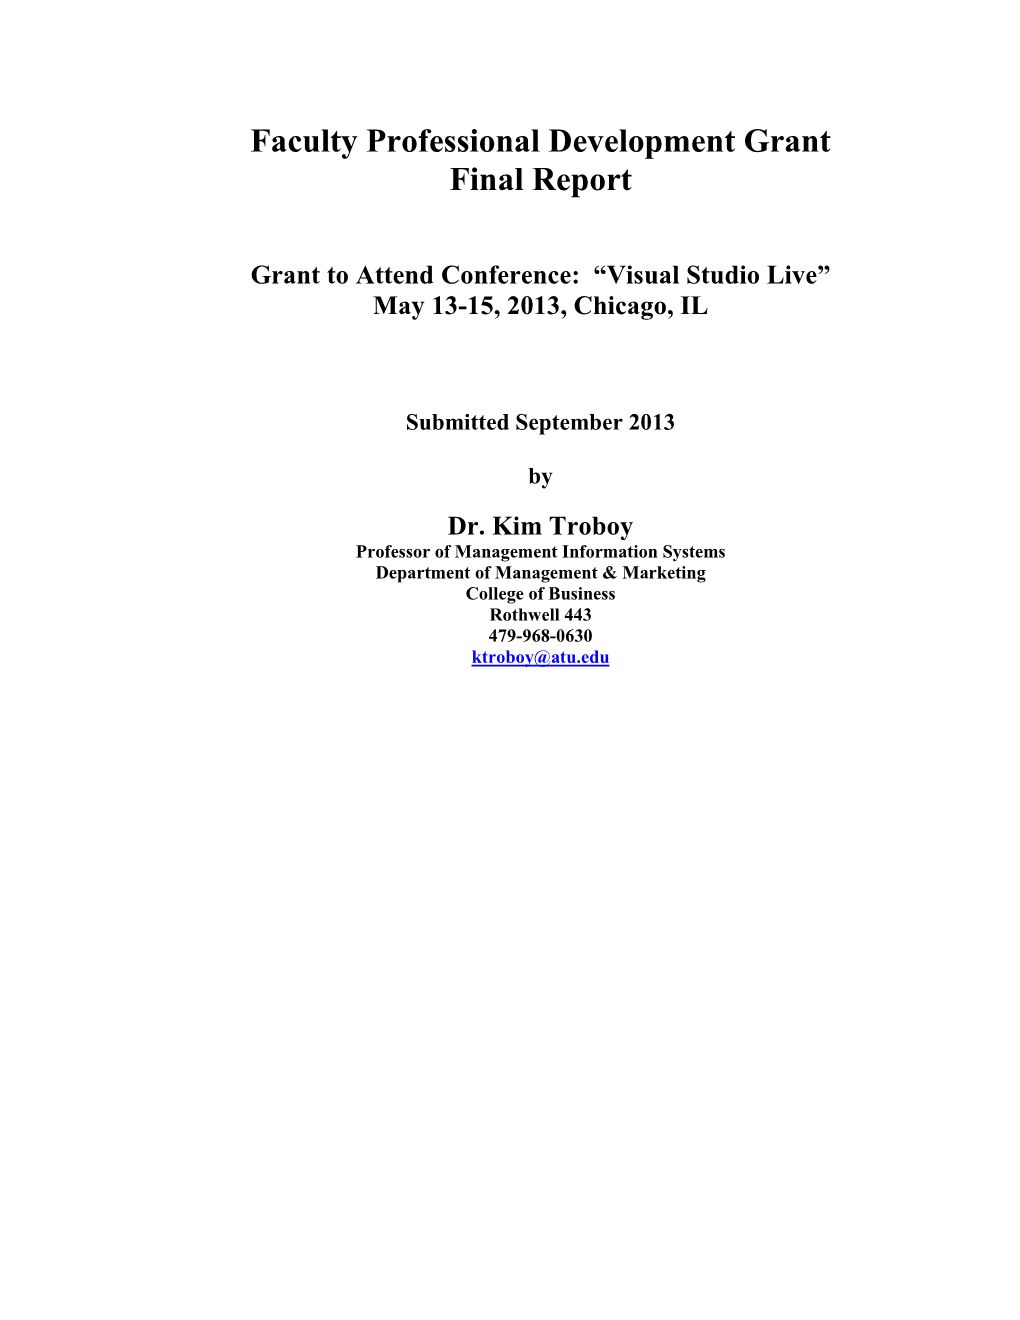 Faculty Professional Development Grant Final Report